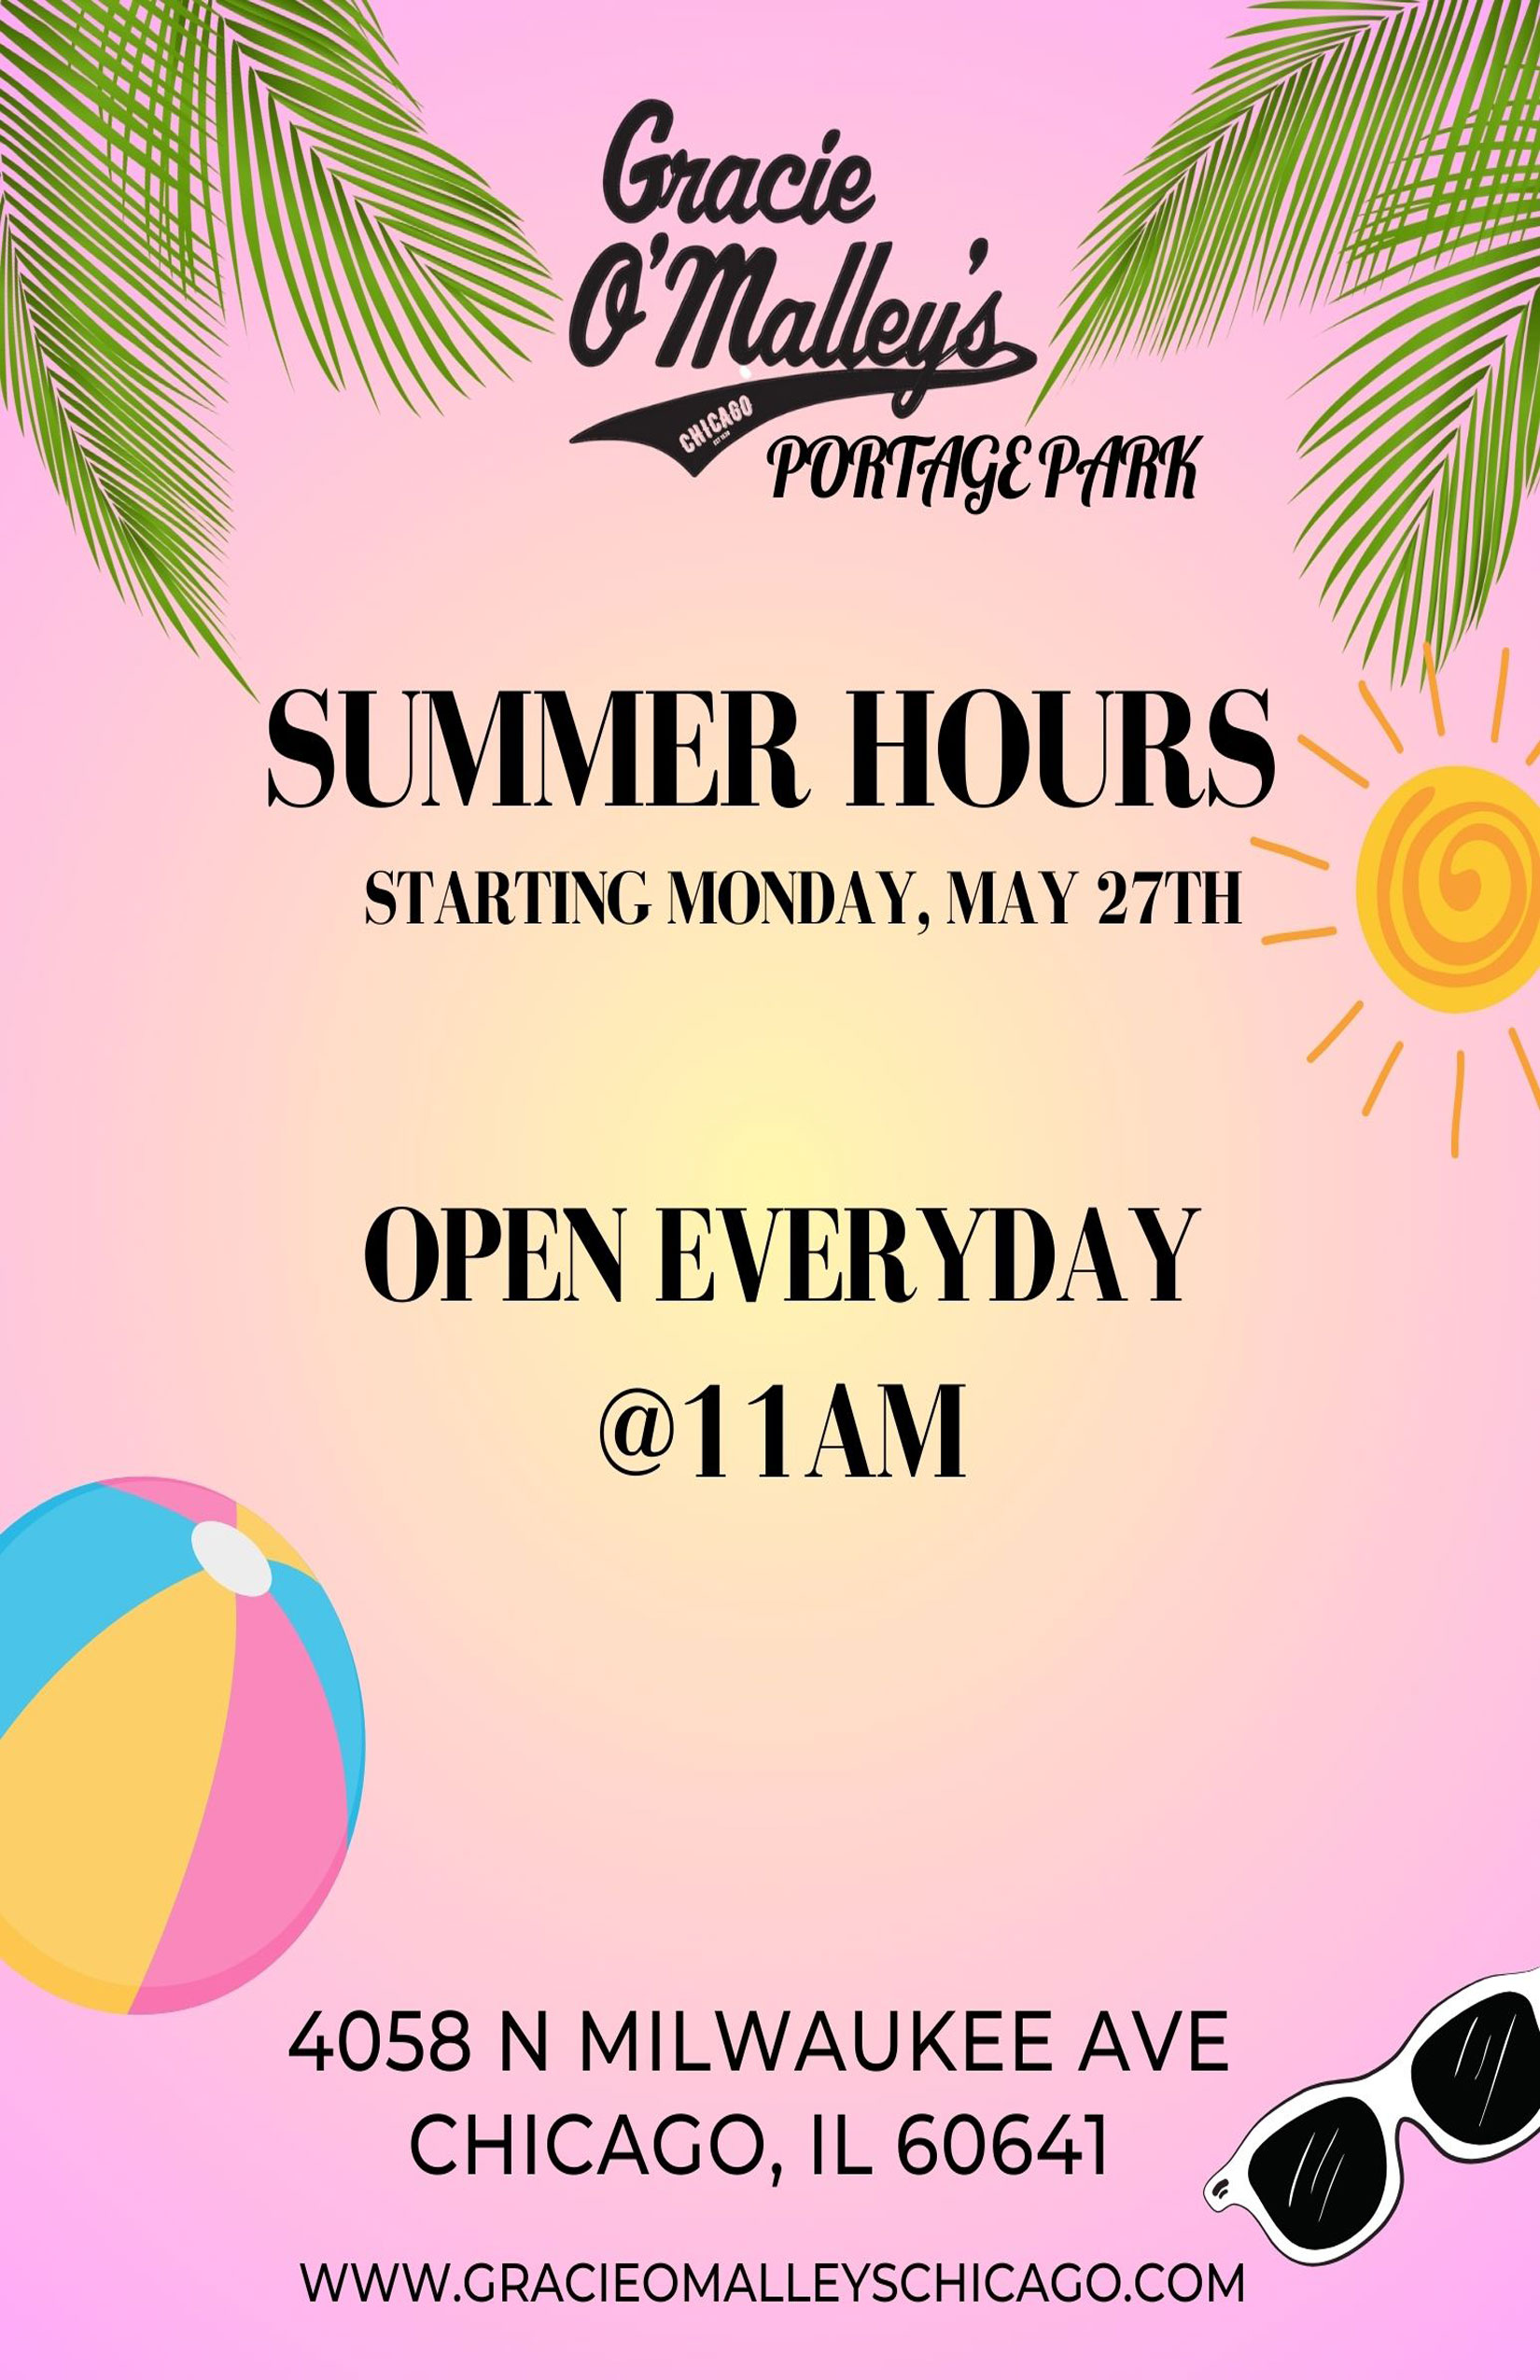 Summer Hours @ Portage Park